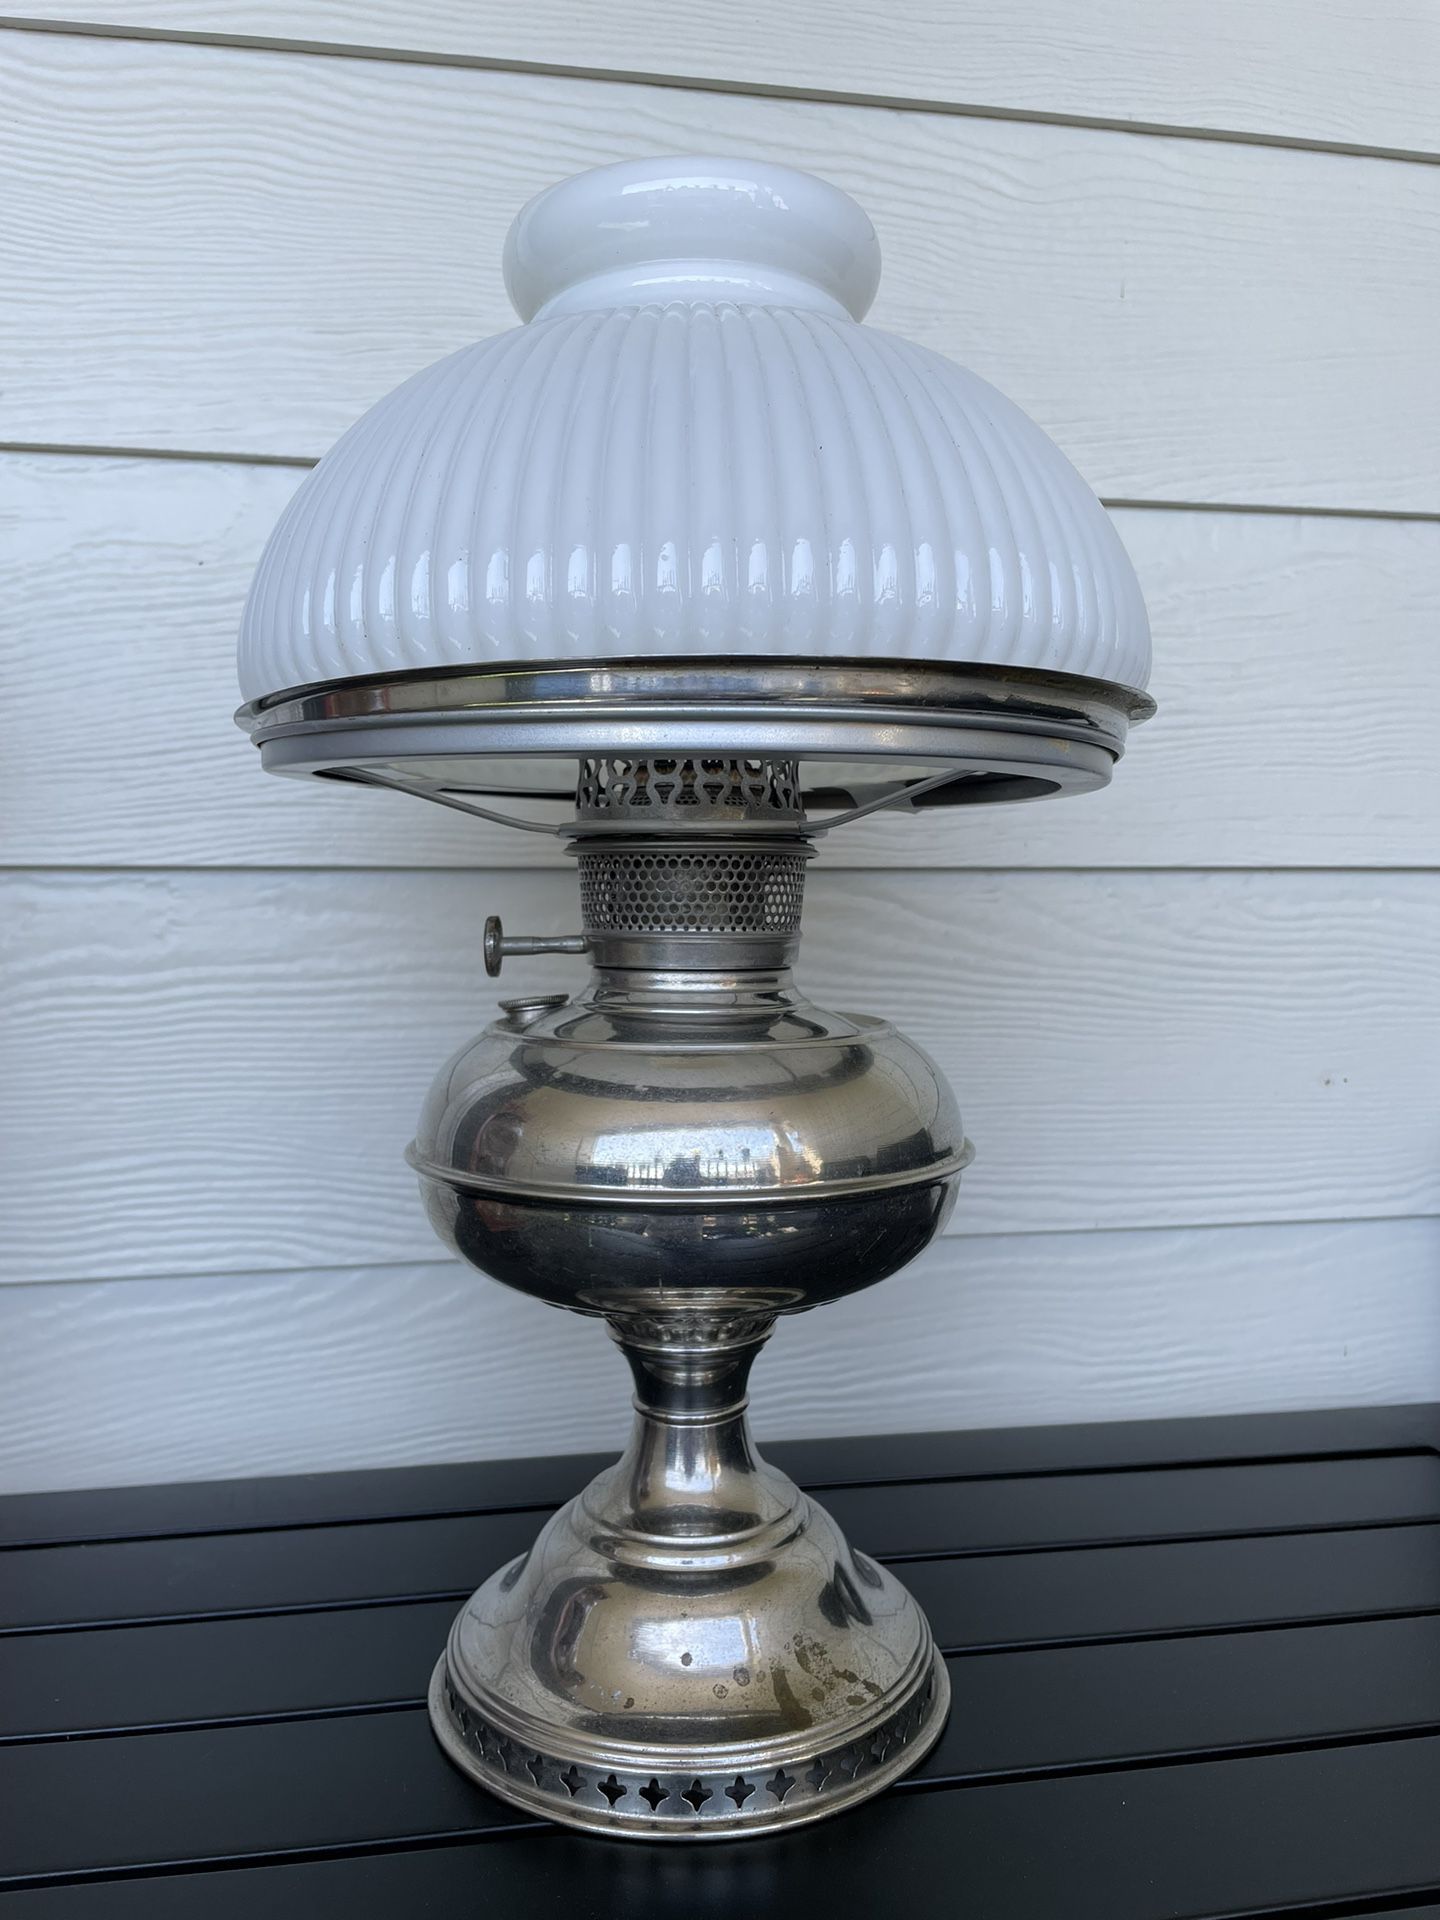 Bradley & Hubbard B& H Antique Oil Lamp 